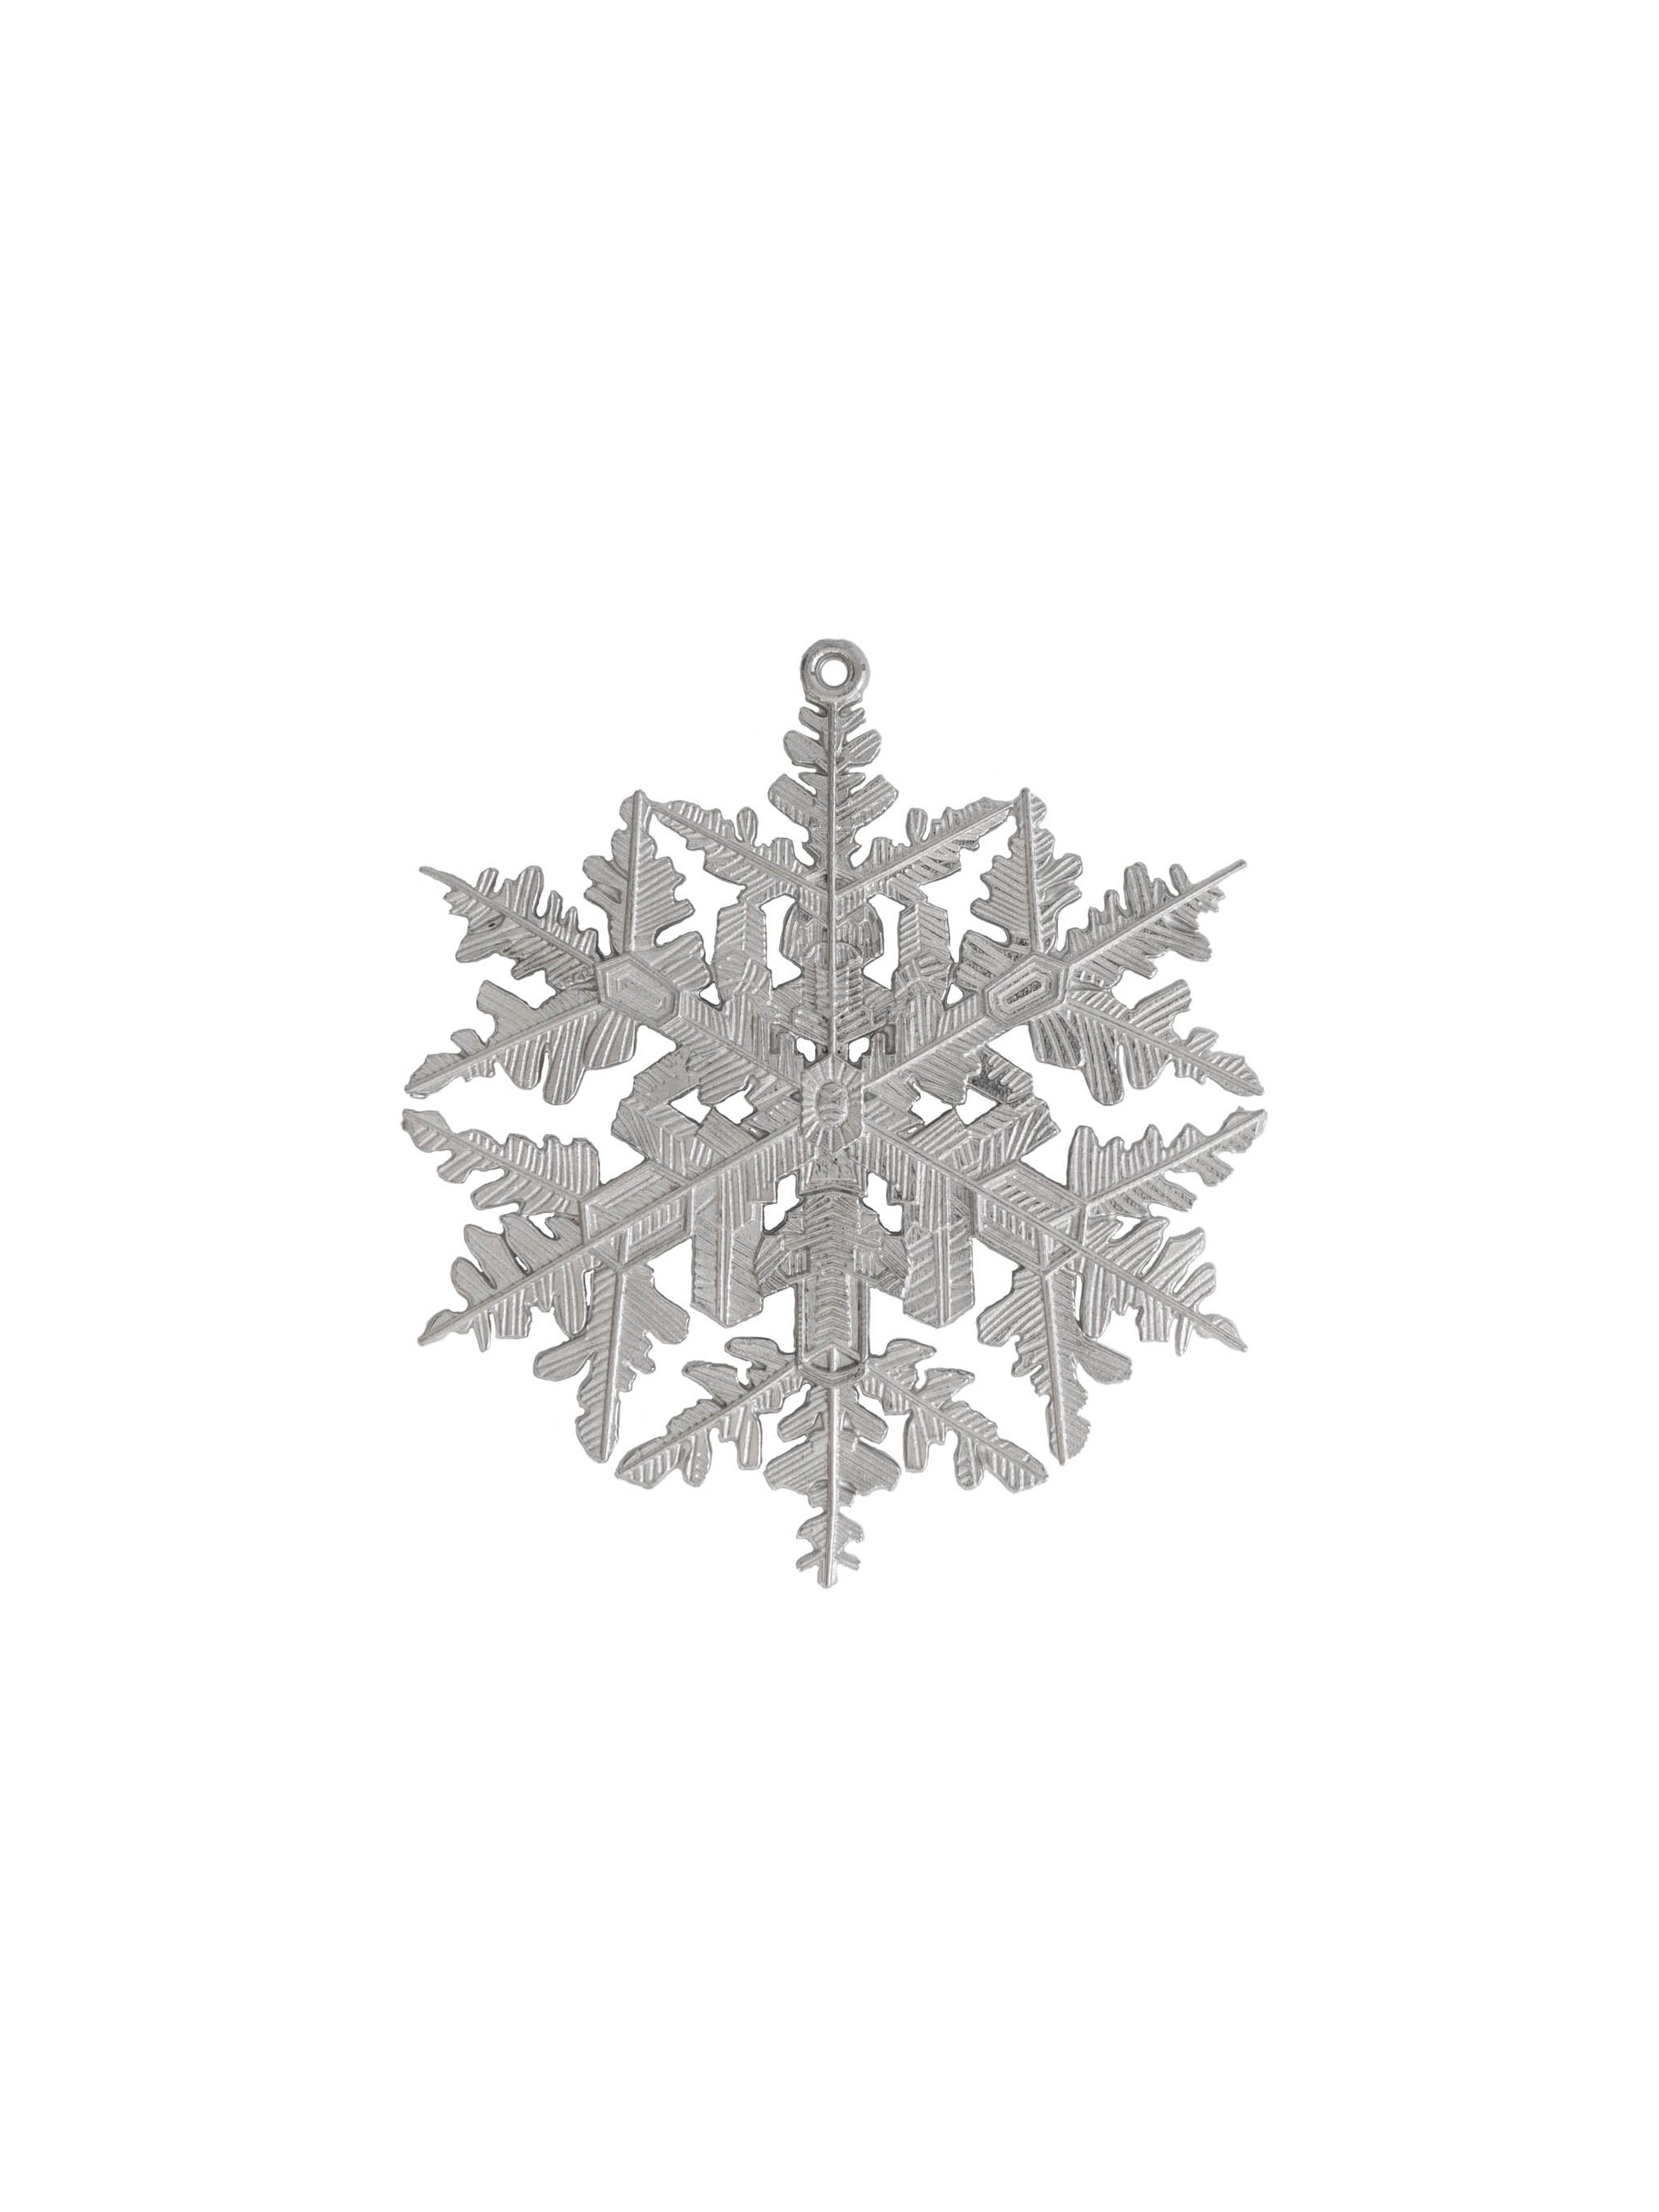 WT Stellar Dendrite Snowflake Pewter Ornament Weston Table